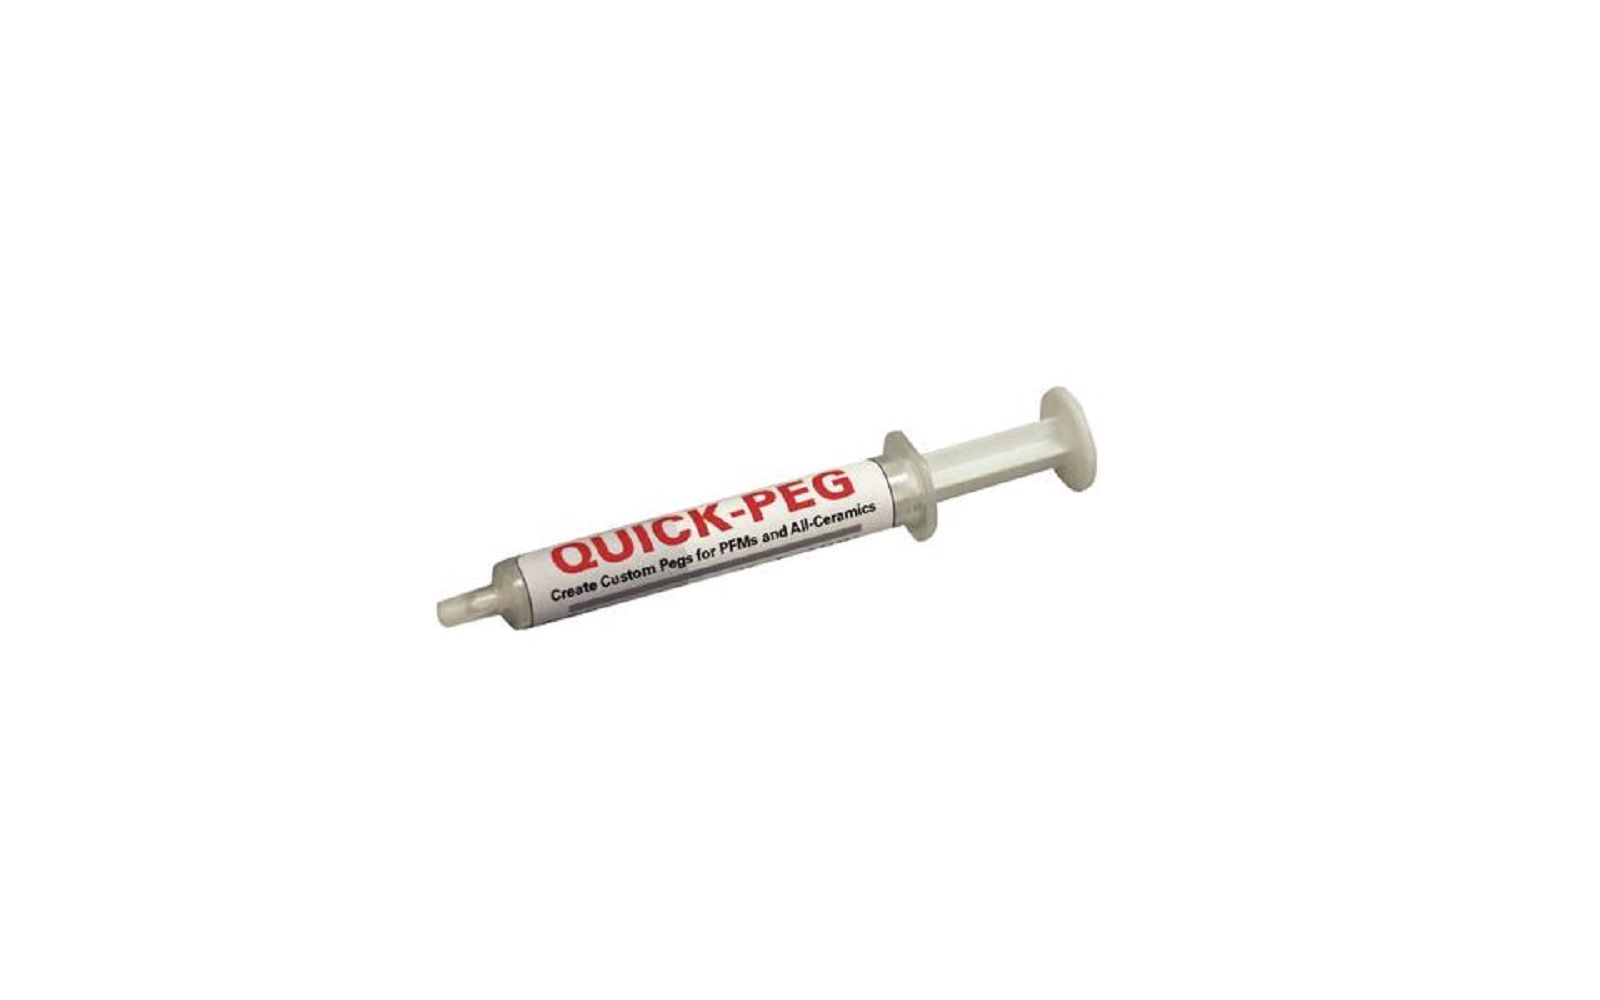 Quick-peg custom firing pegs – 10 cc syringes, 3/pkg